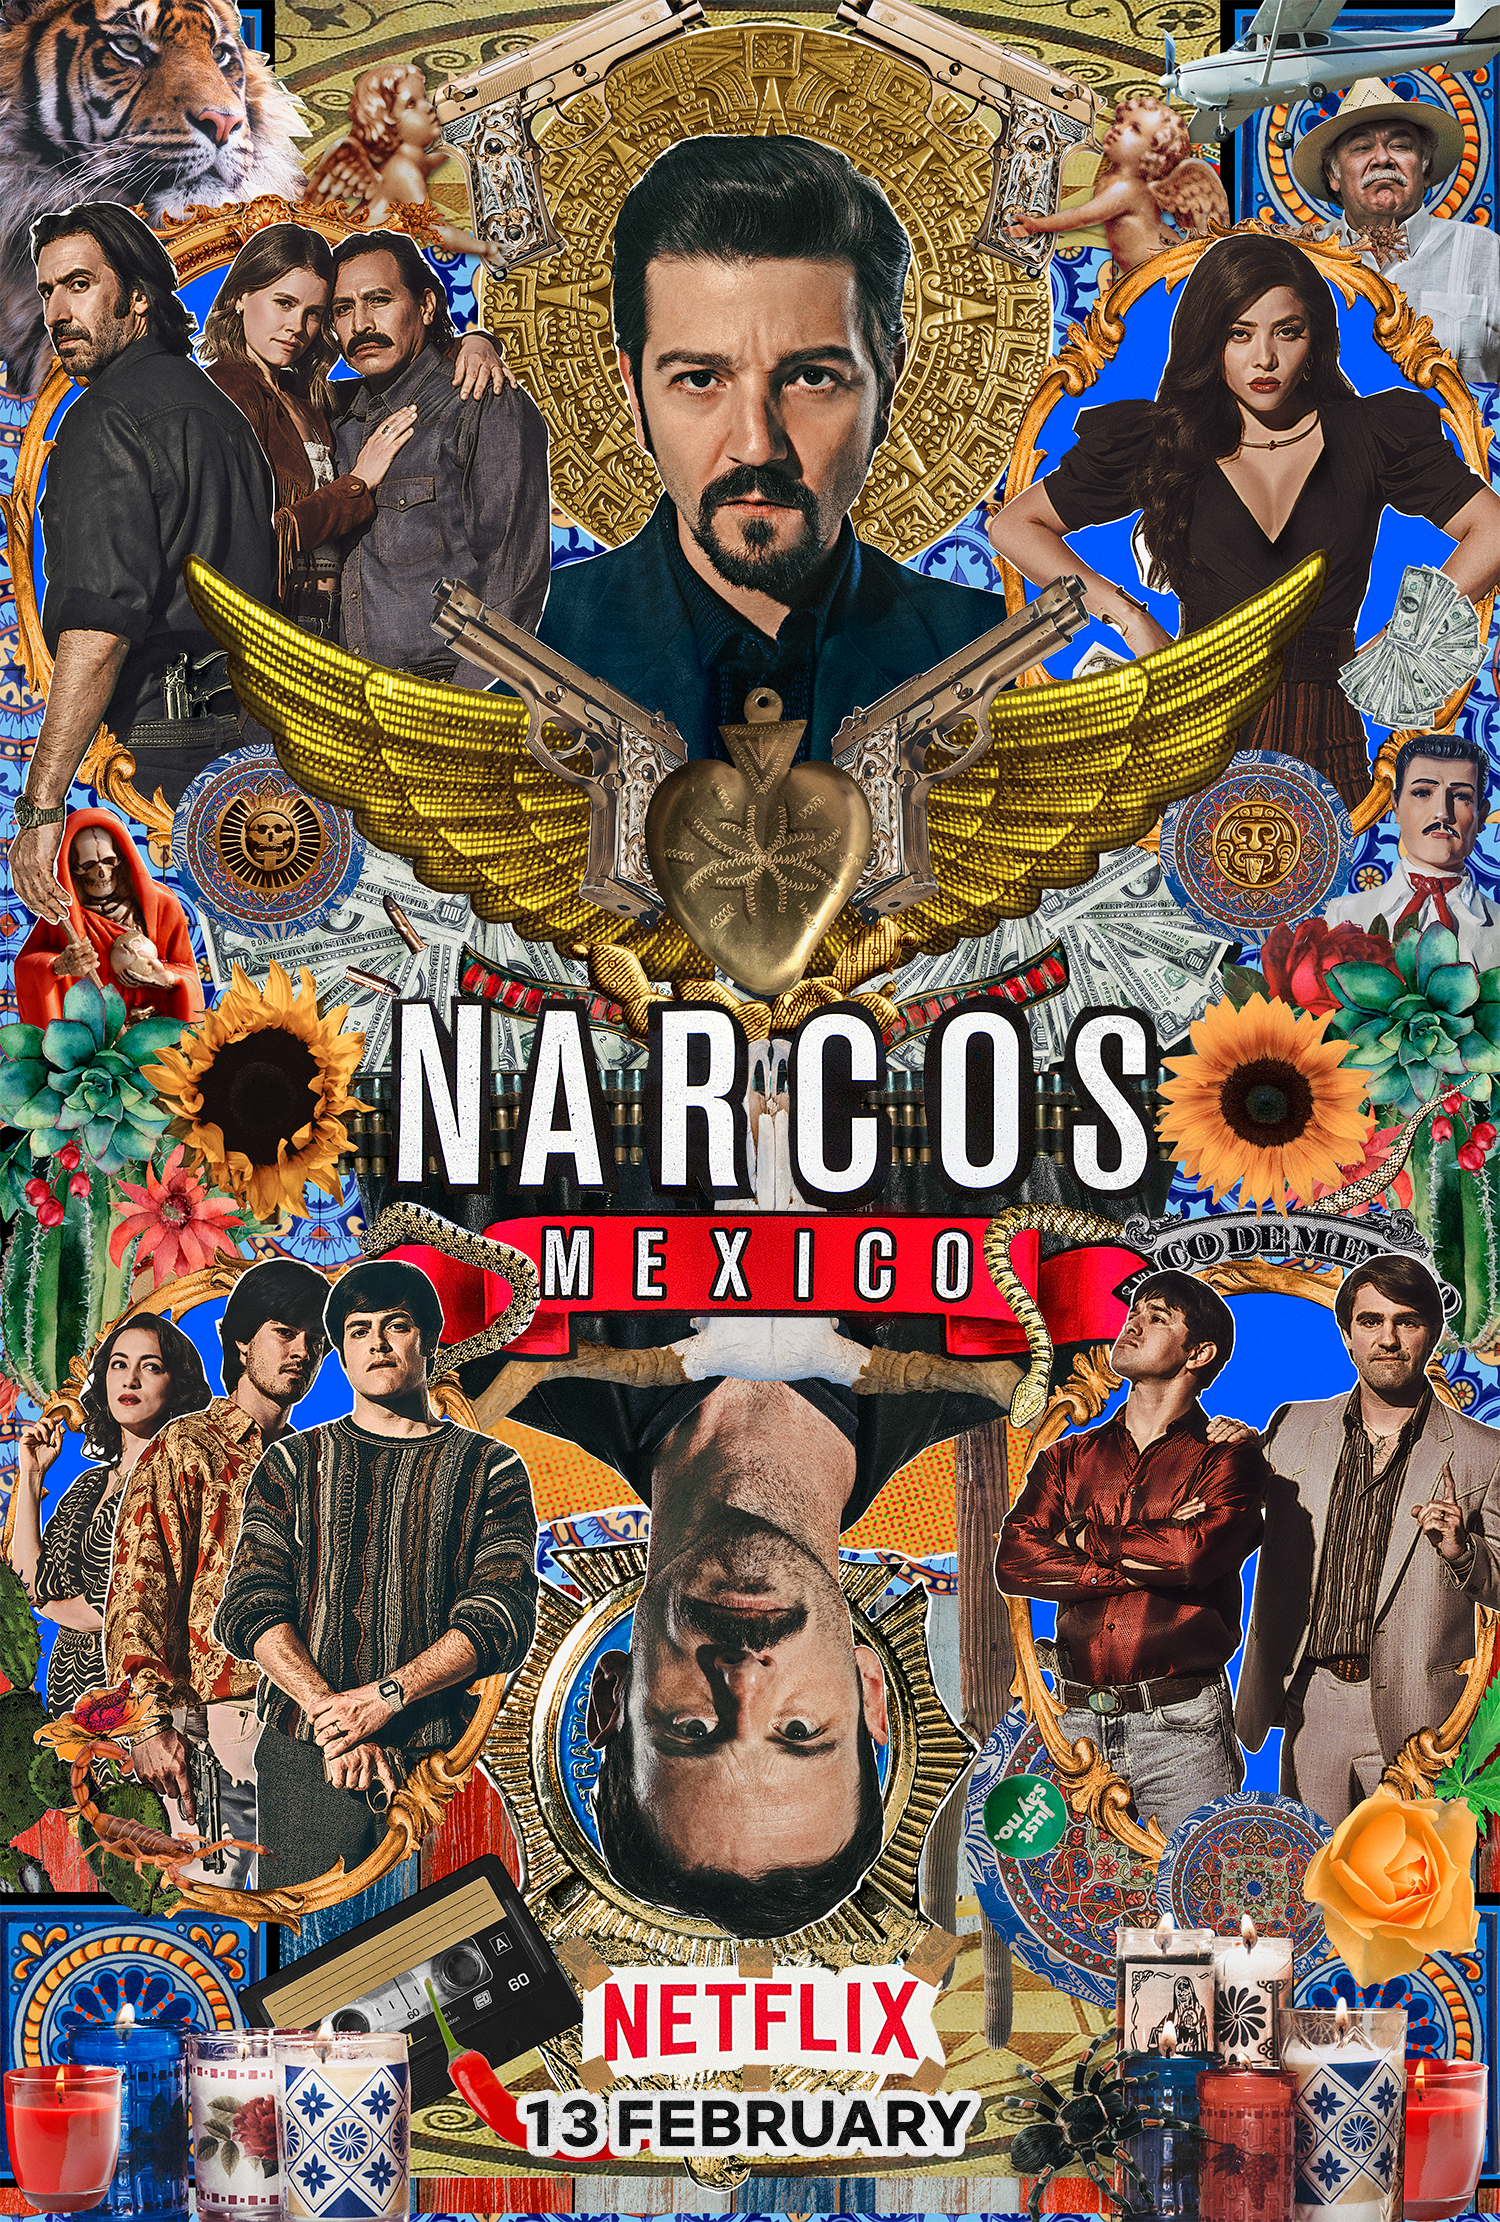 Stiahni si Seriál Narcos: Mexiko / Narcos: Mexico S01E03 (CZ)[WebRip][1080p] = CSFD 86%